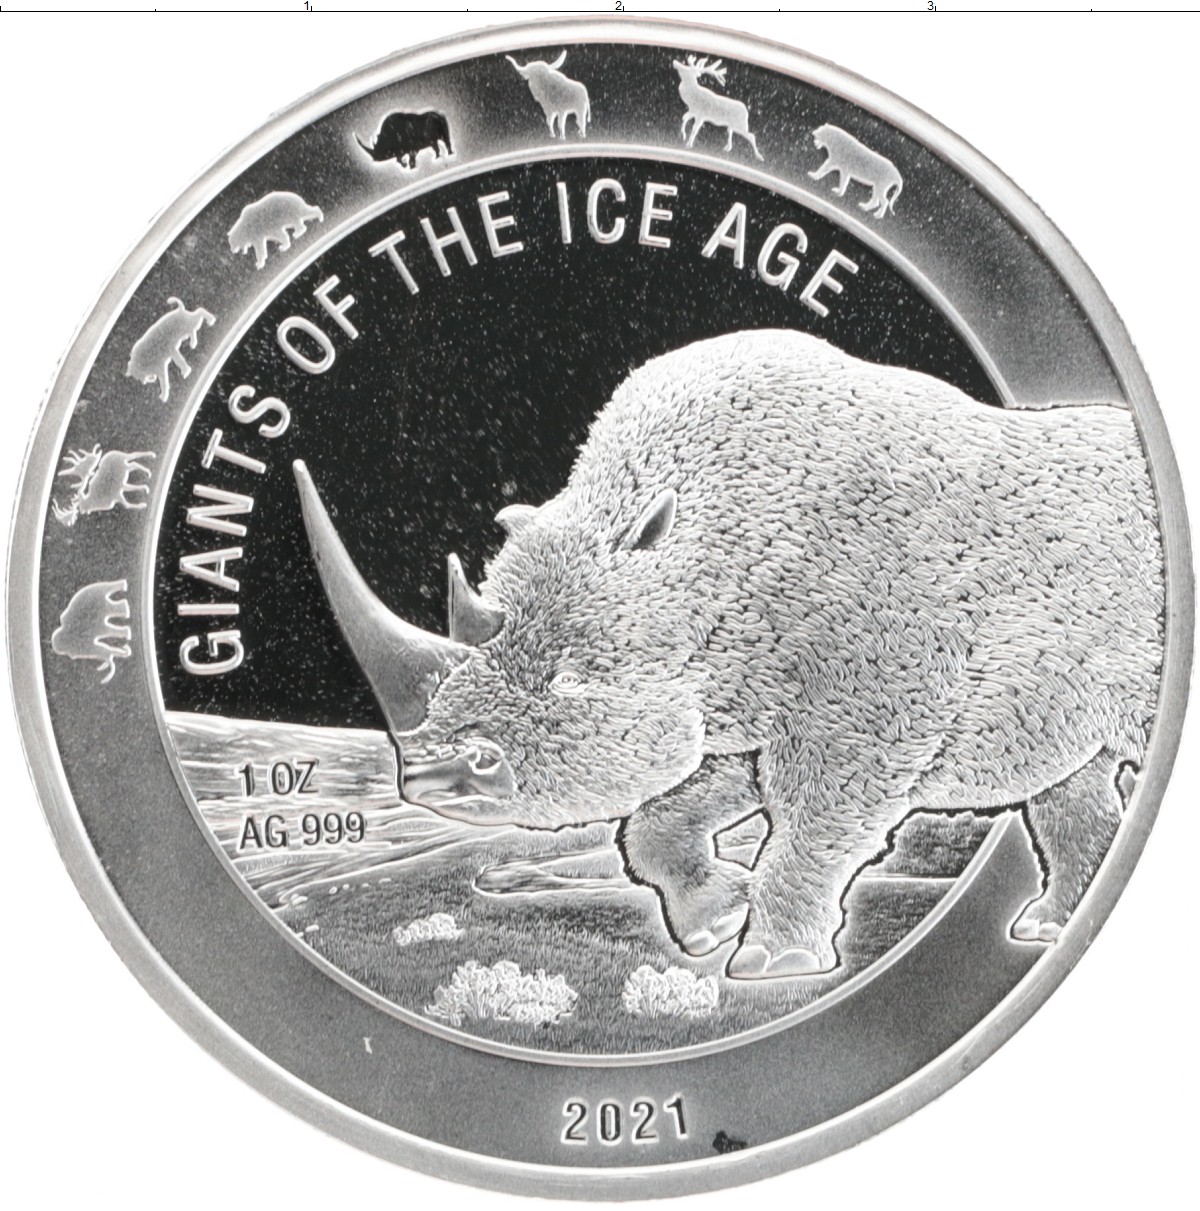 Г ан 5. Серебряная монета гана 2021. Монеты Ганы 2021. Монета с носорогом. Монета с изображением носорога.